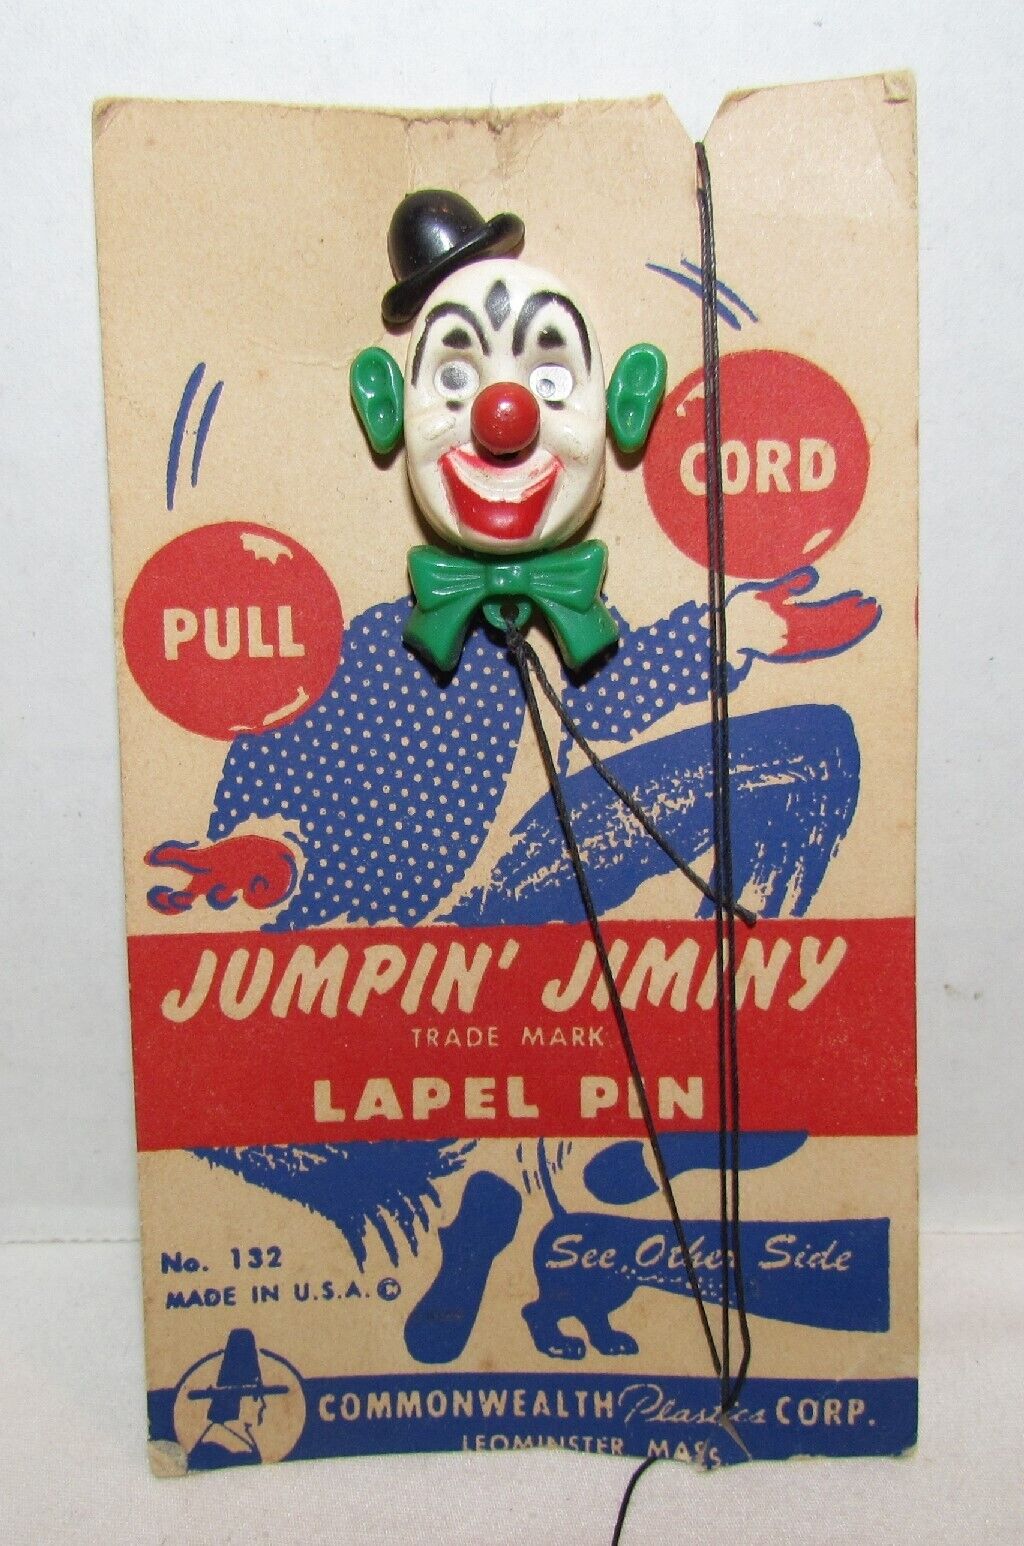 1950s Jumpin' Jiminy Lapel Pin , pull string clown pin, Commonwealth Plastics